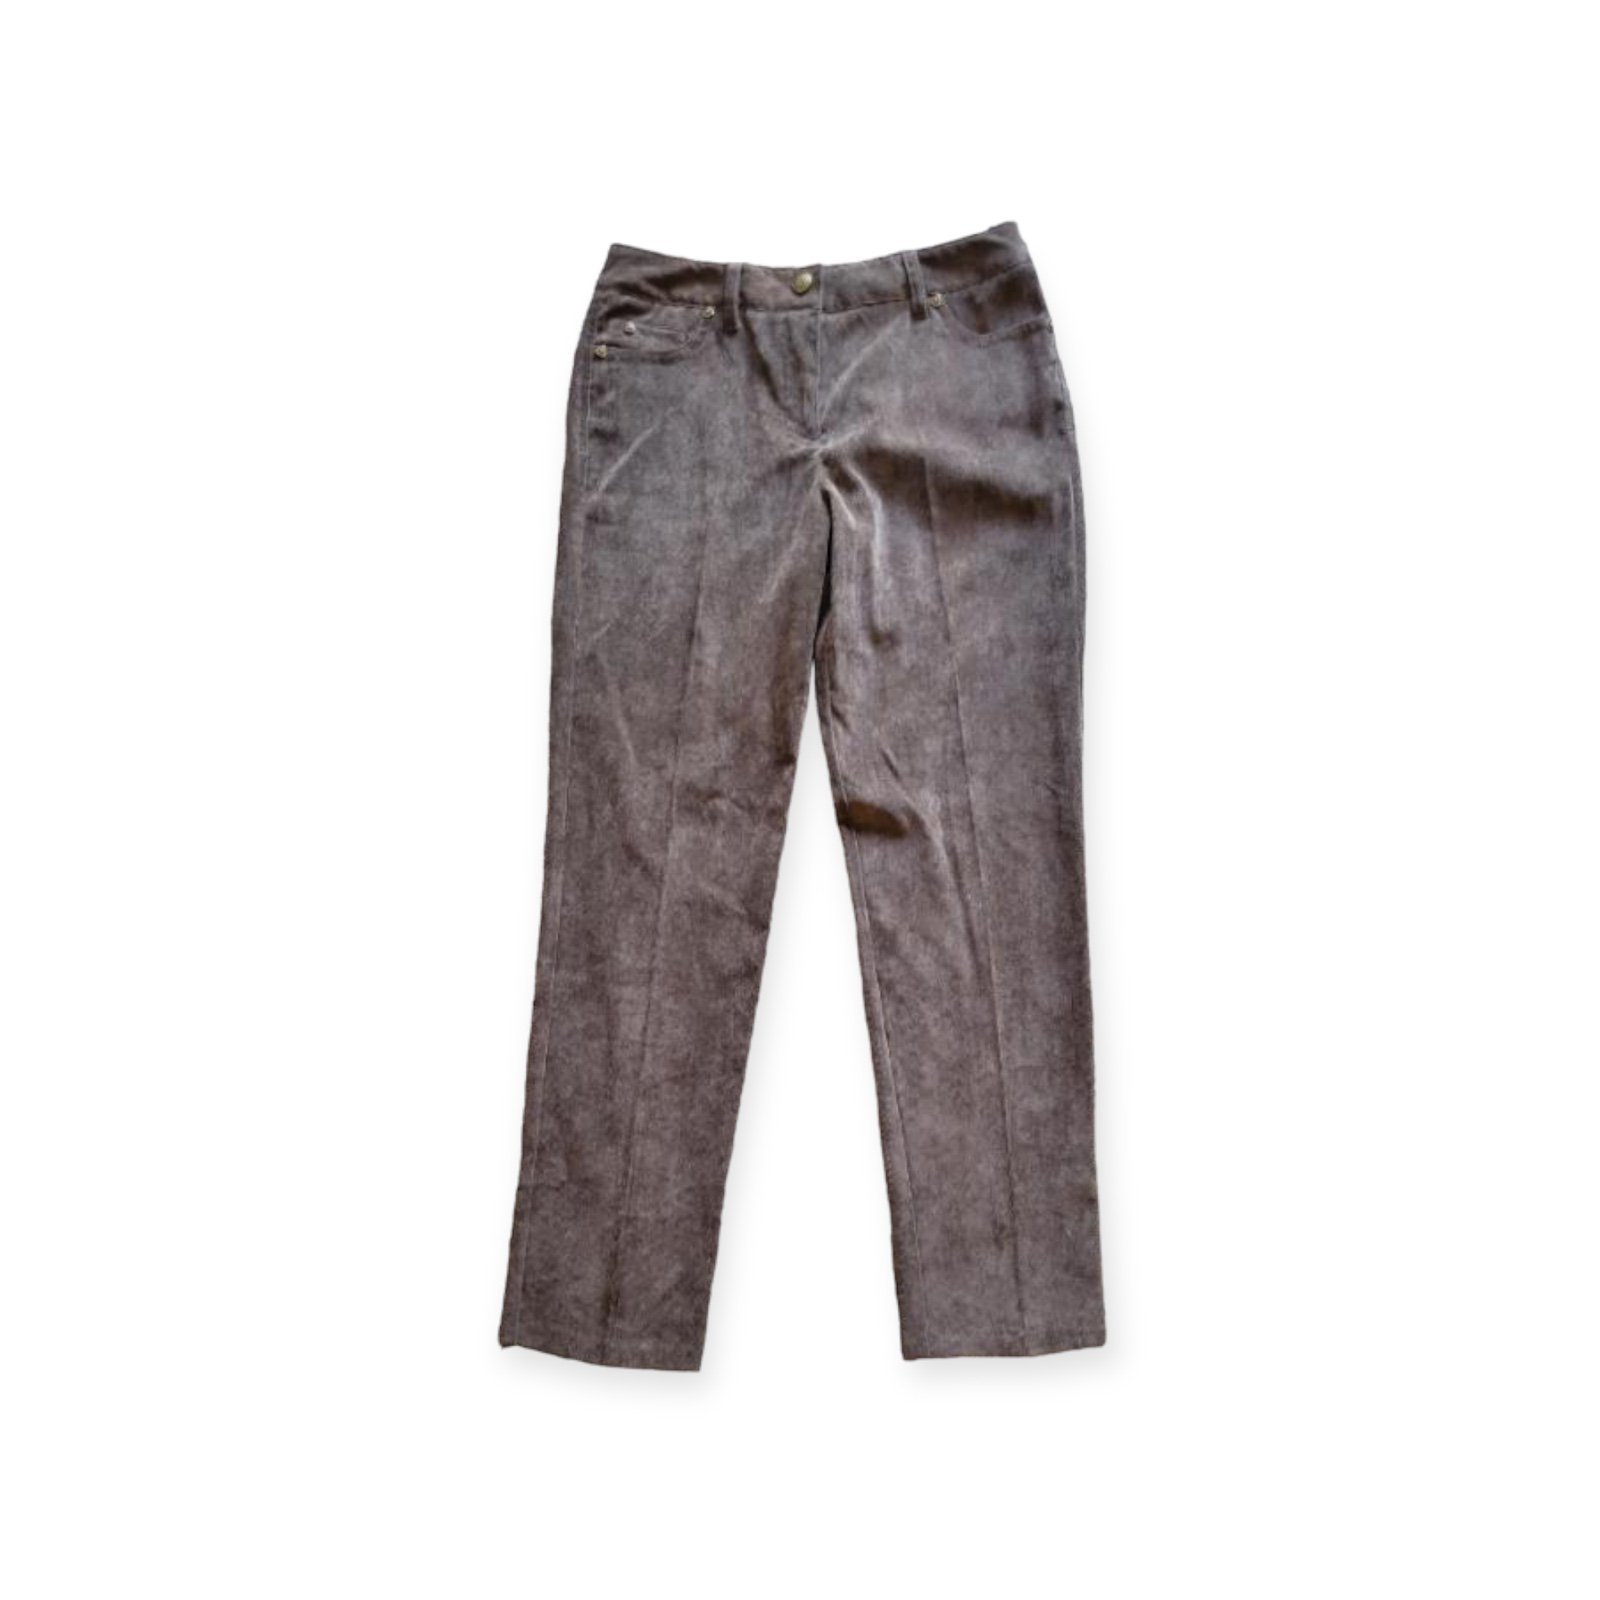 Wholesale price Zac & Rachel brown pants Size 6 small F